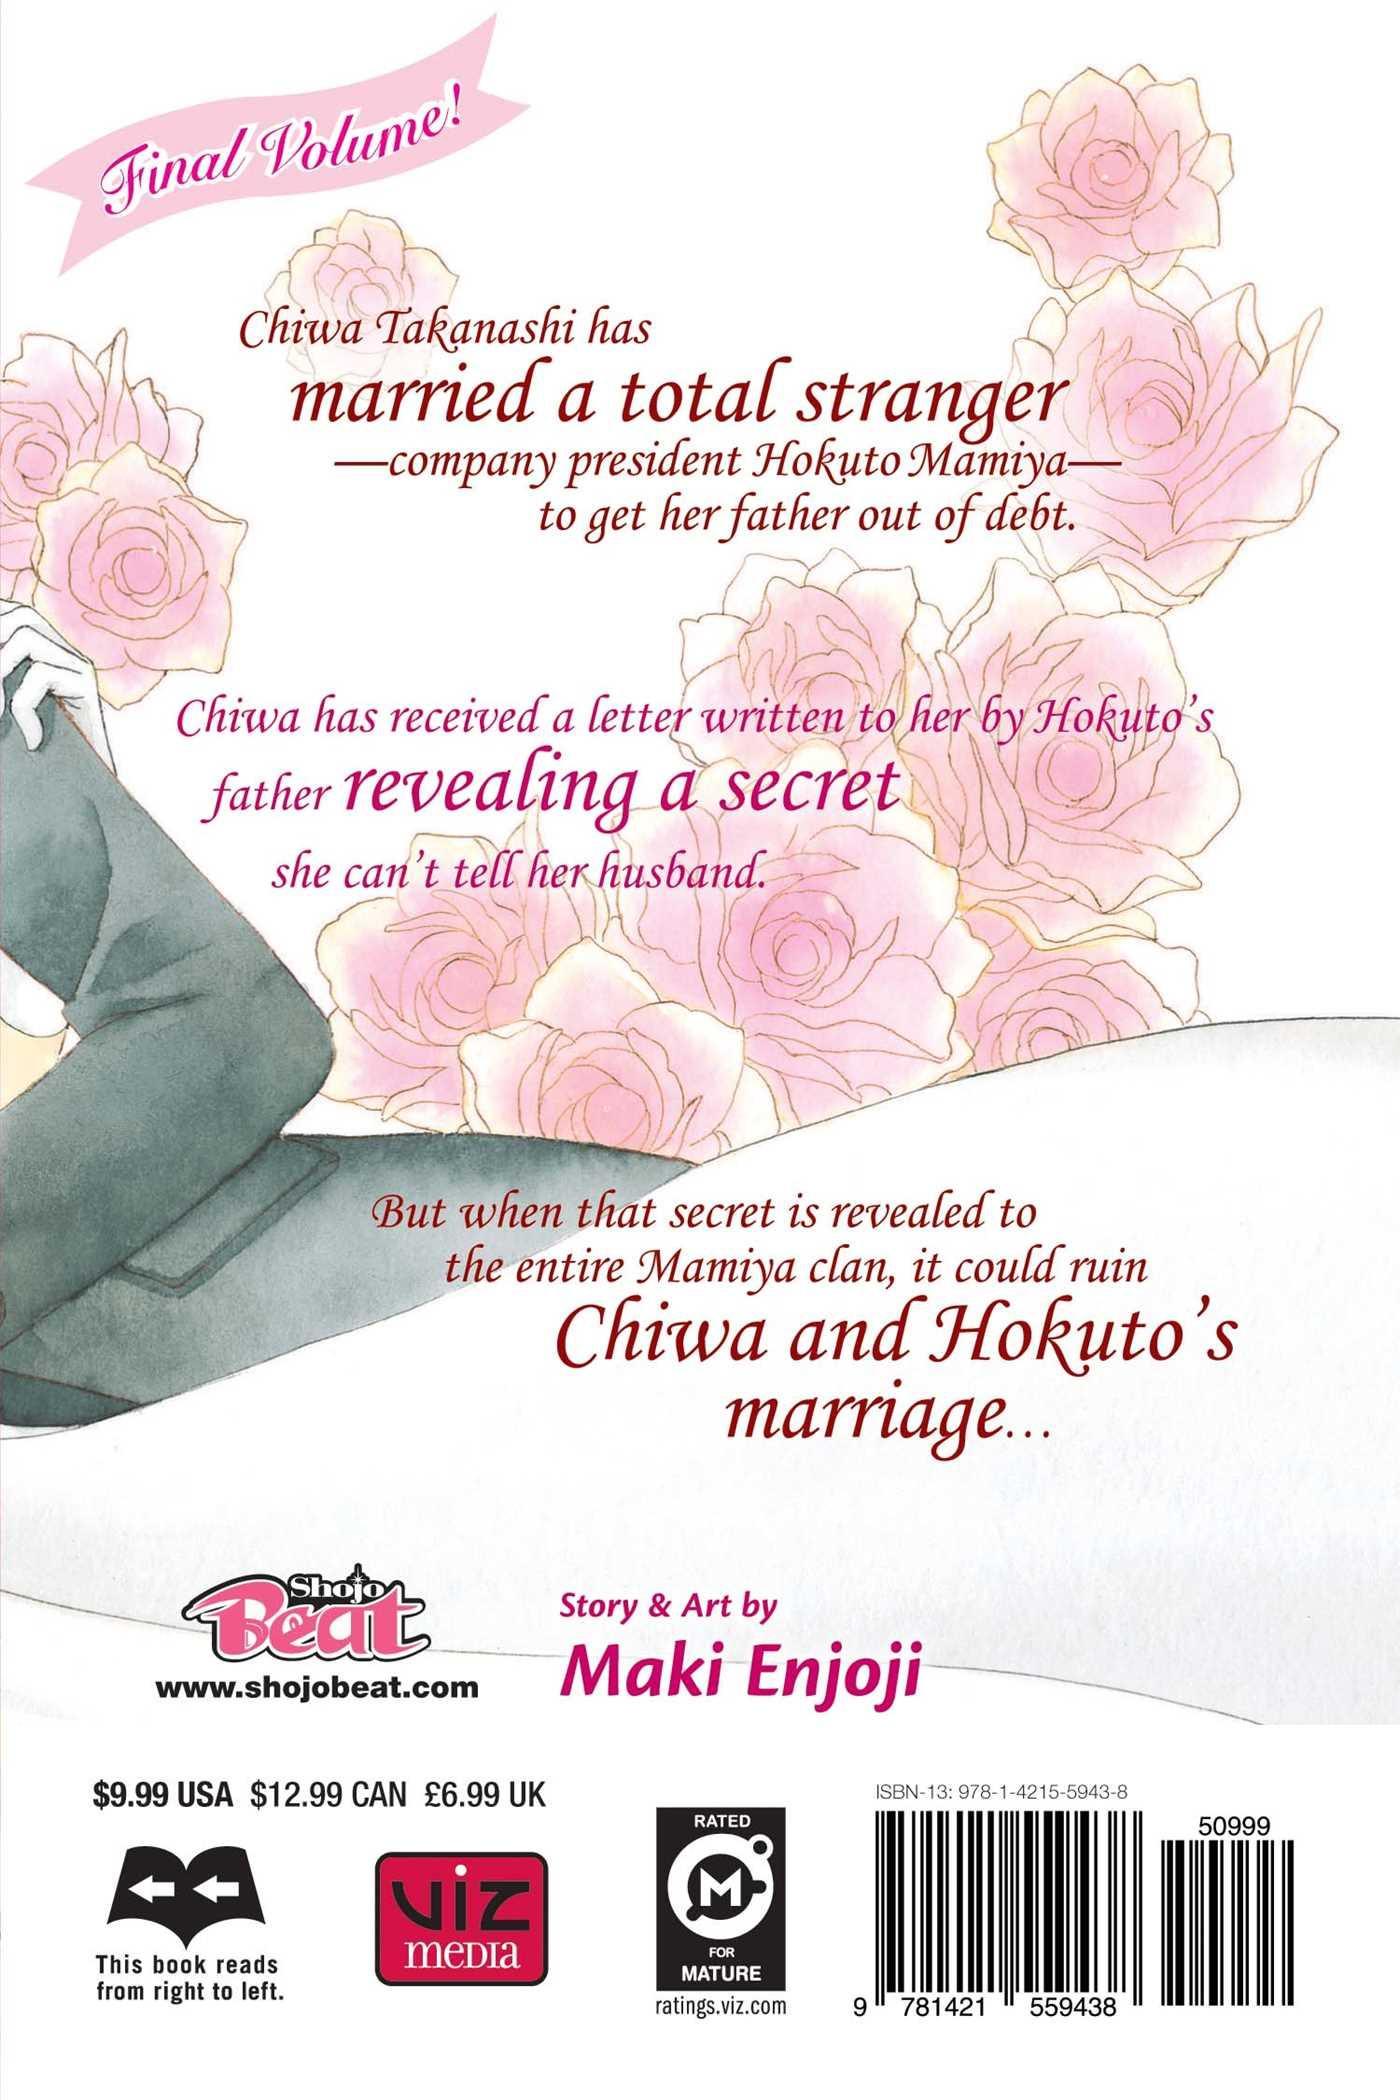 Happy Marriage?! (Manga) Vol. 10 - Tankobonbon